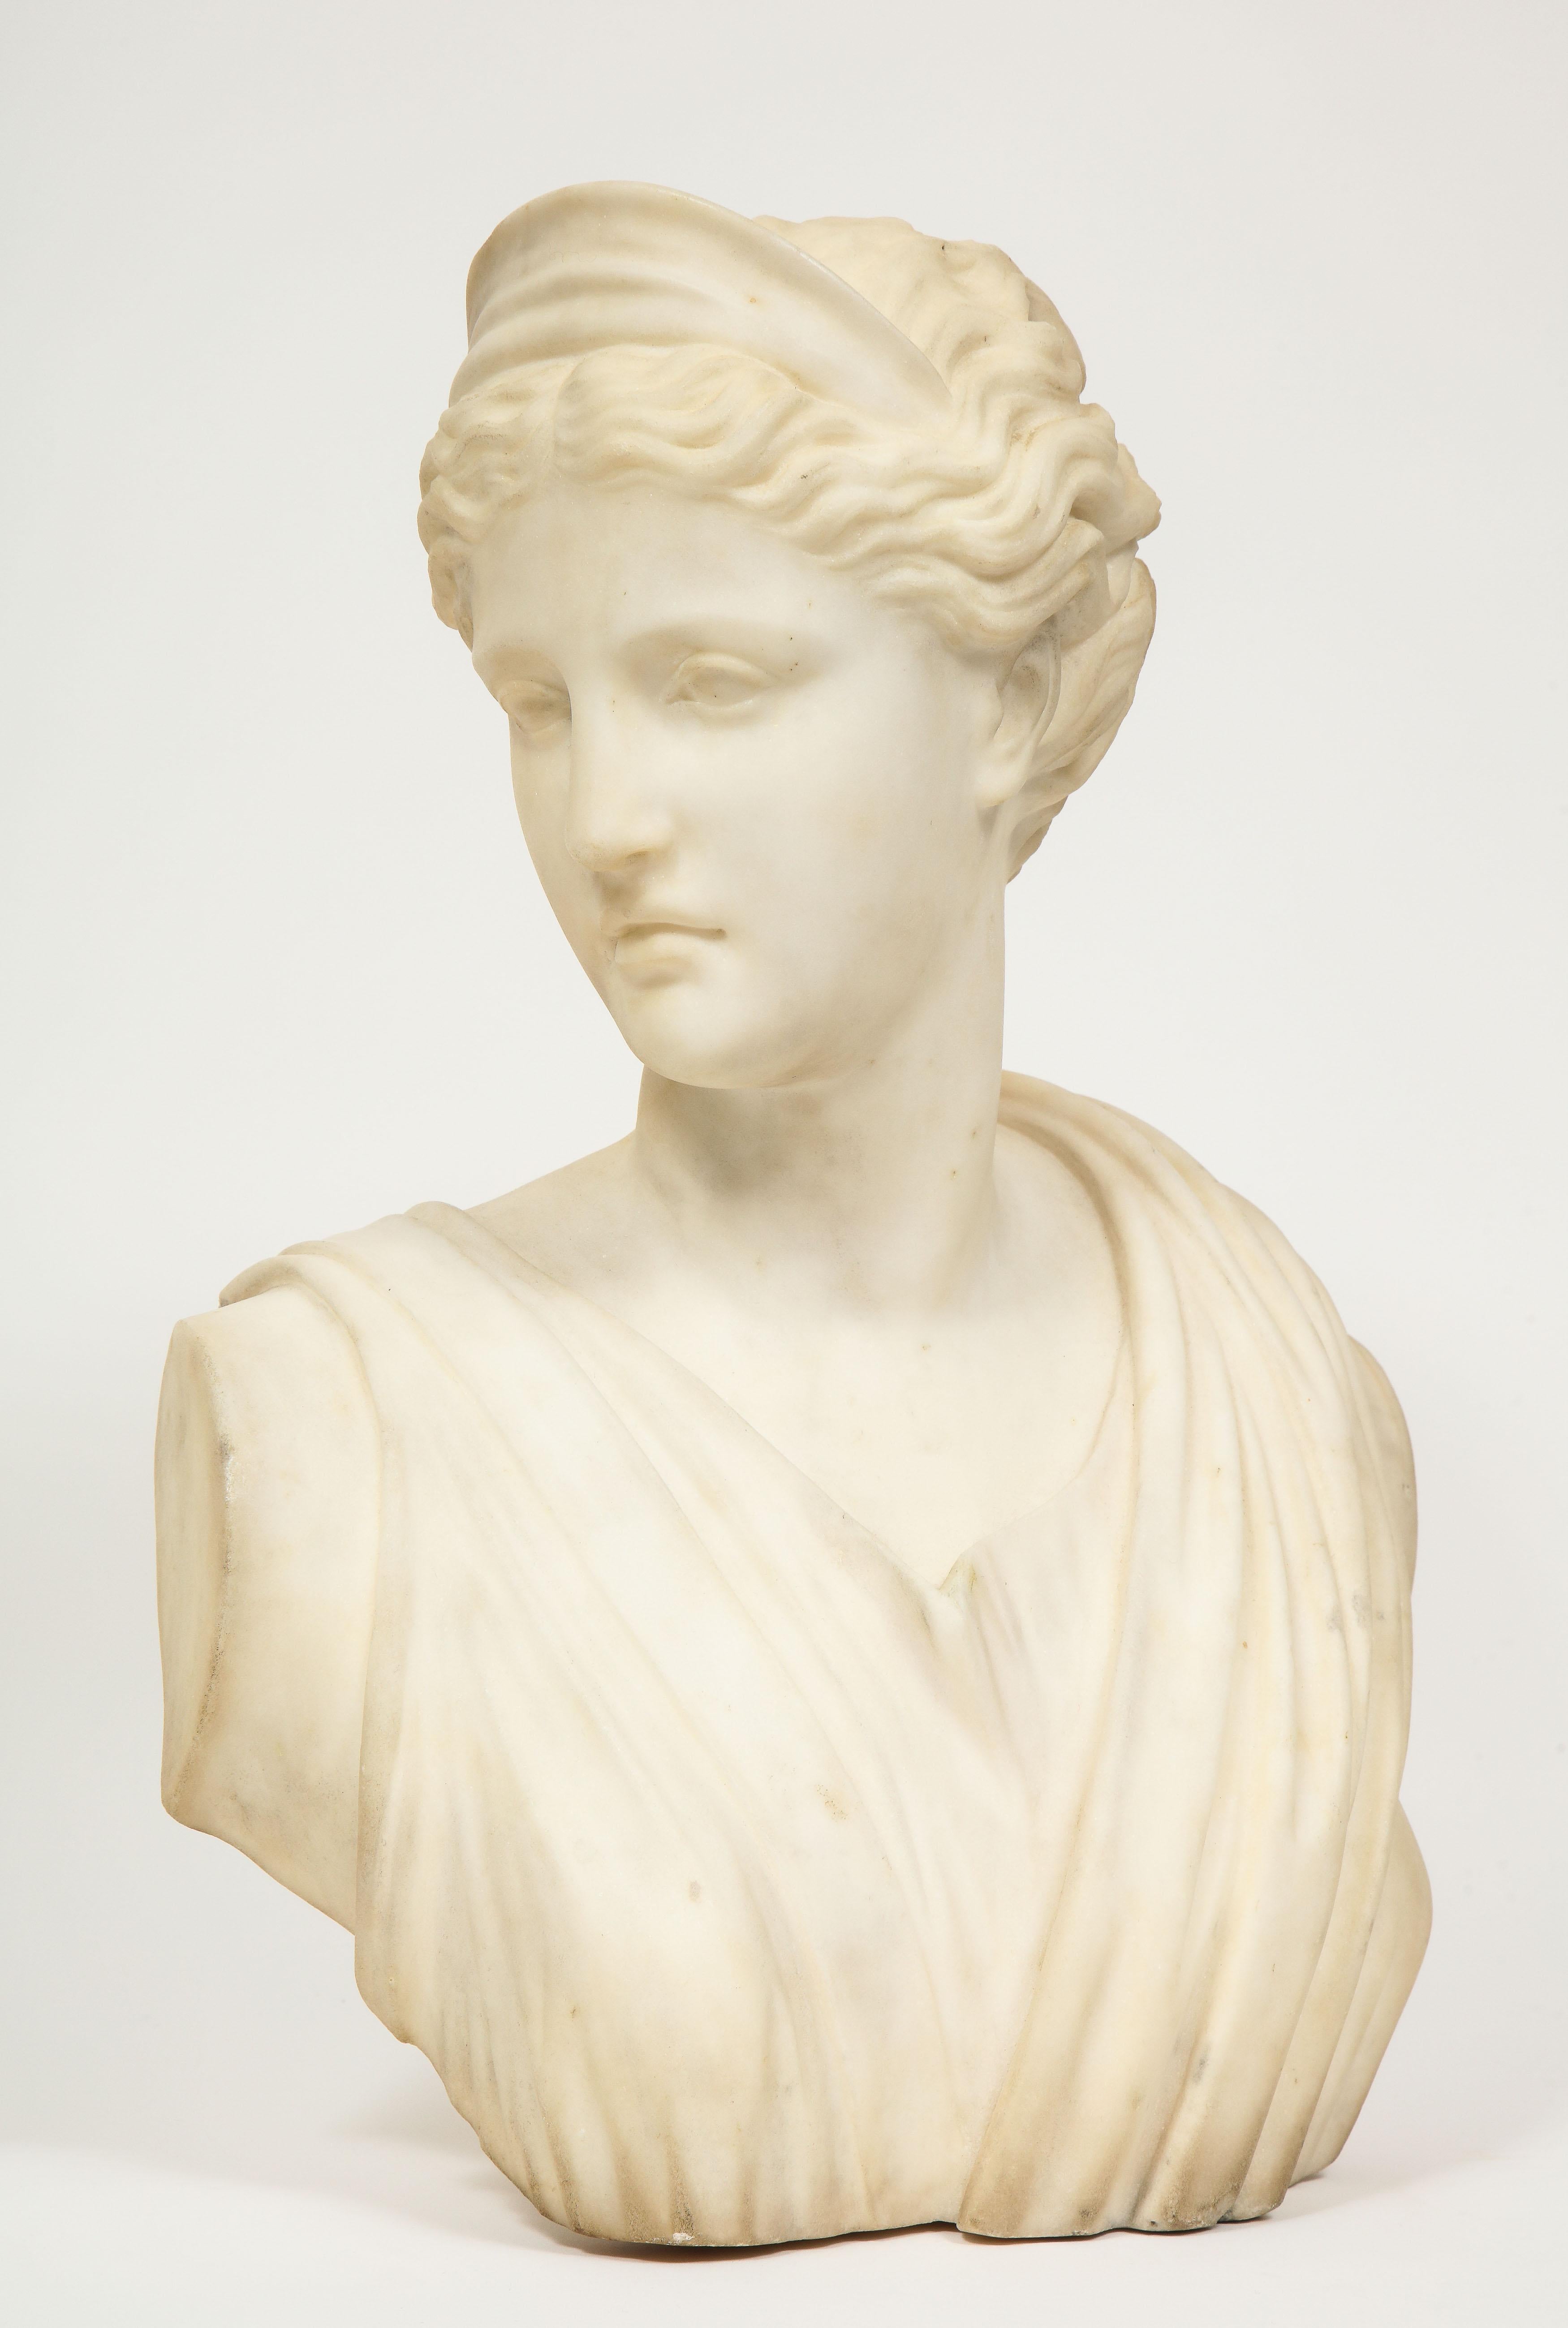 'Italian School, 19th Century' A White Marble Bust of Goddess Diana Artemis 5